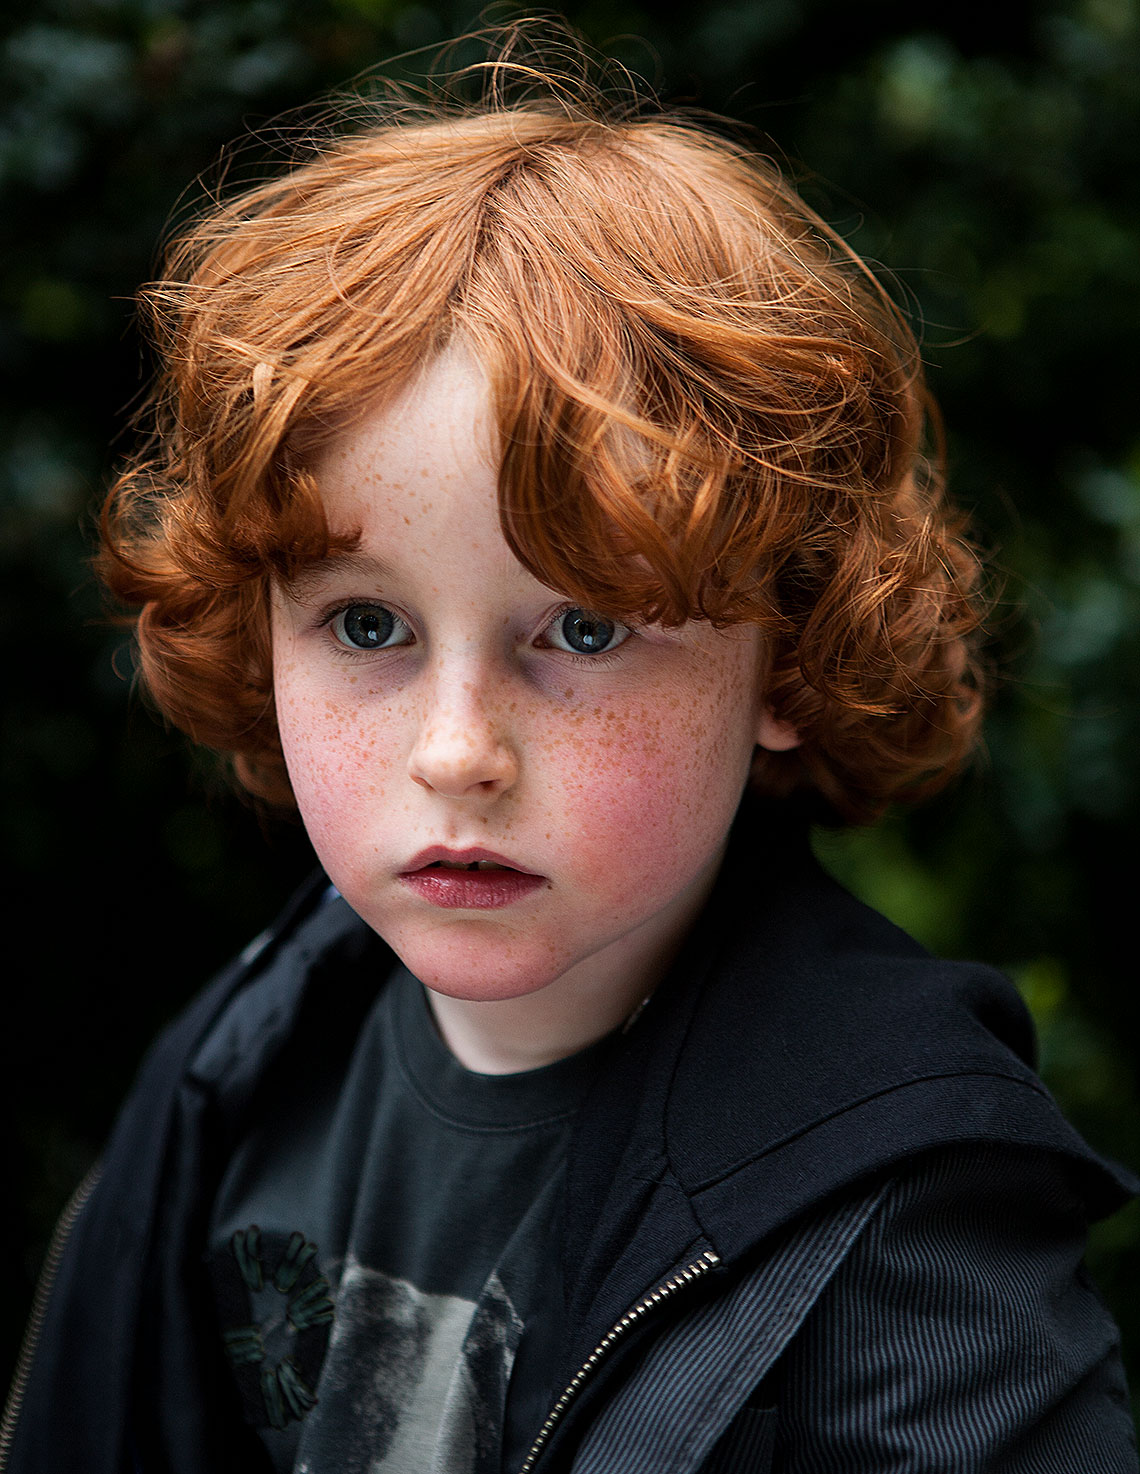 Portrait | Irish Boy | Dublin | Brian Park Photo New York